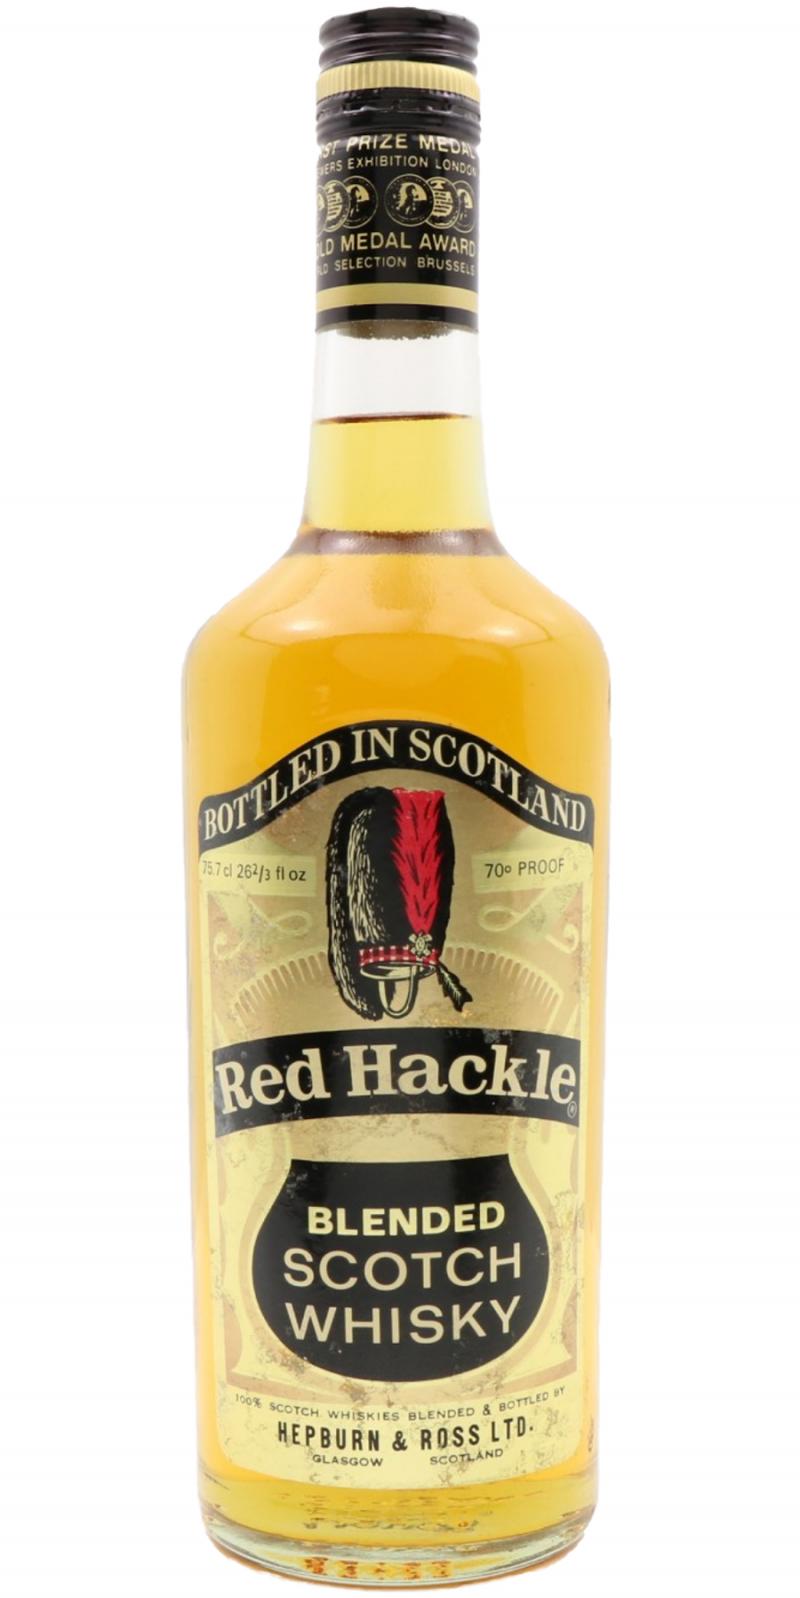 obligatorisk smøre reparere Red Hackle Blended Scotch Whisky - Value and price information - Whiskystats